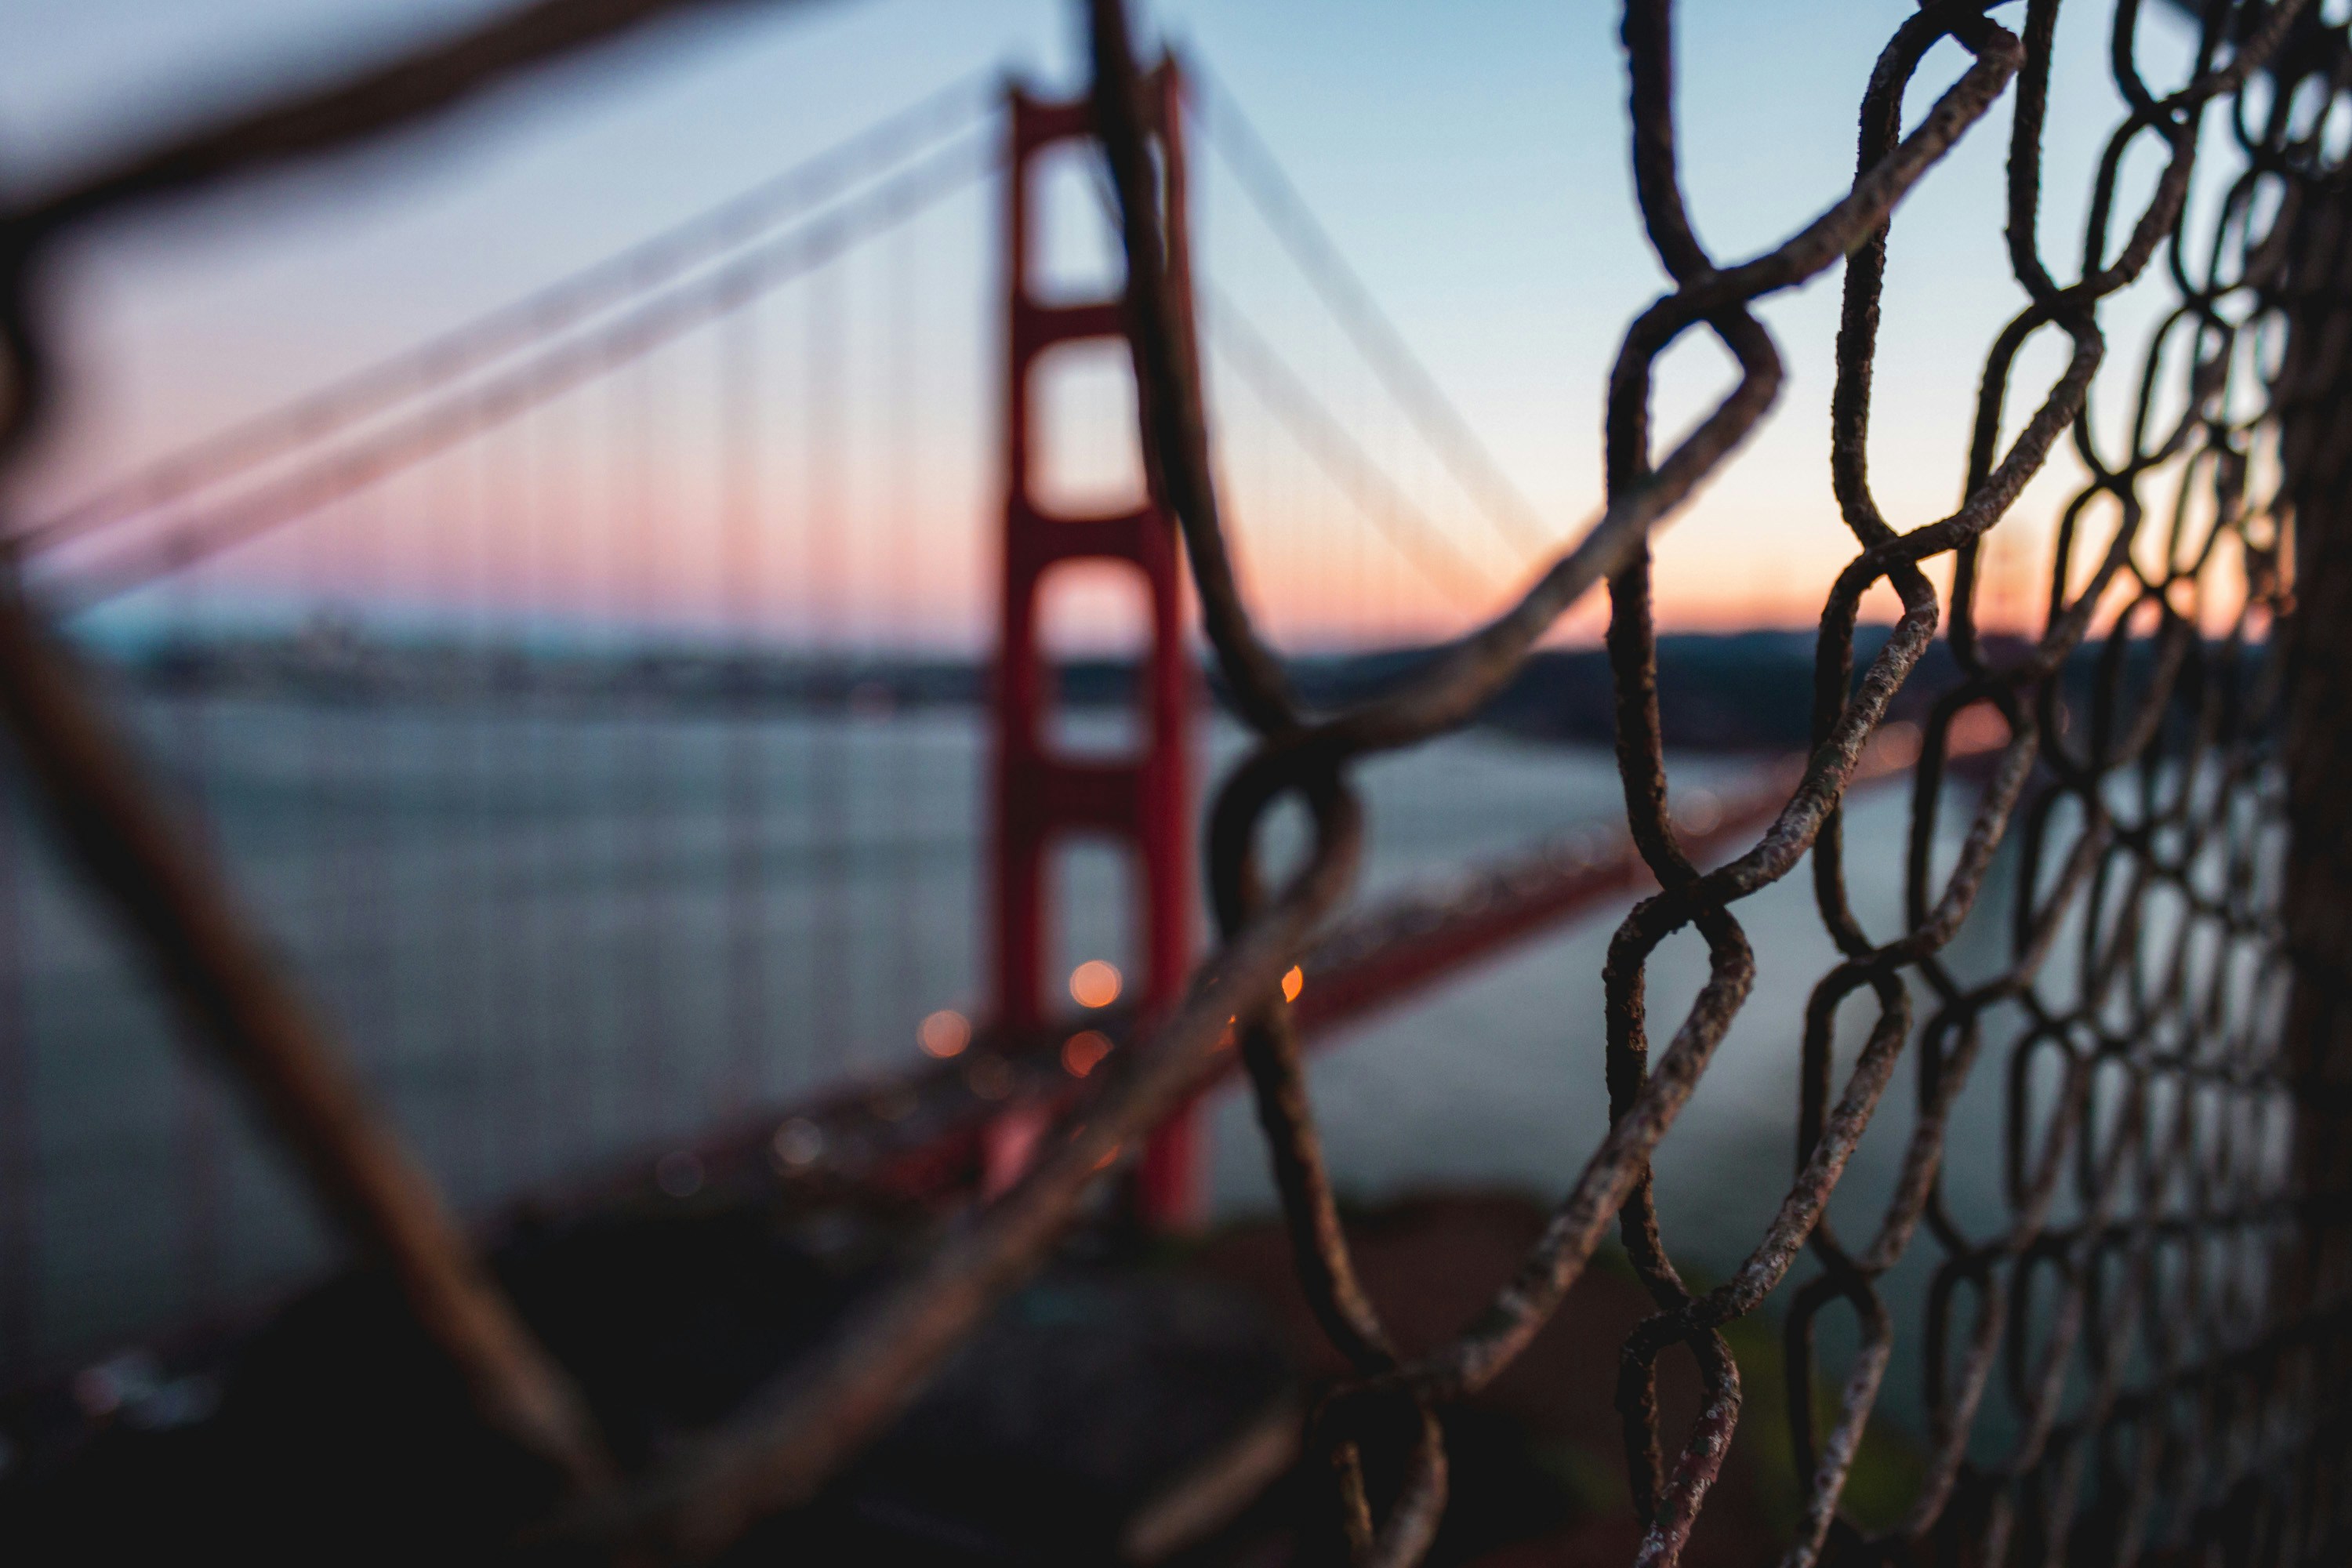 Golden Gate Bridge near fence at night